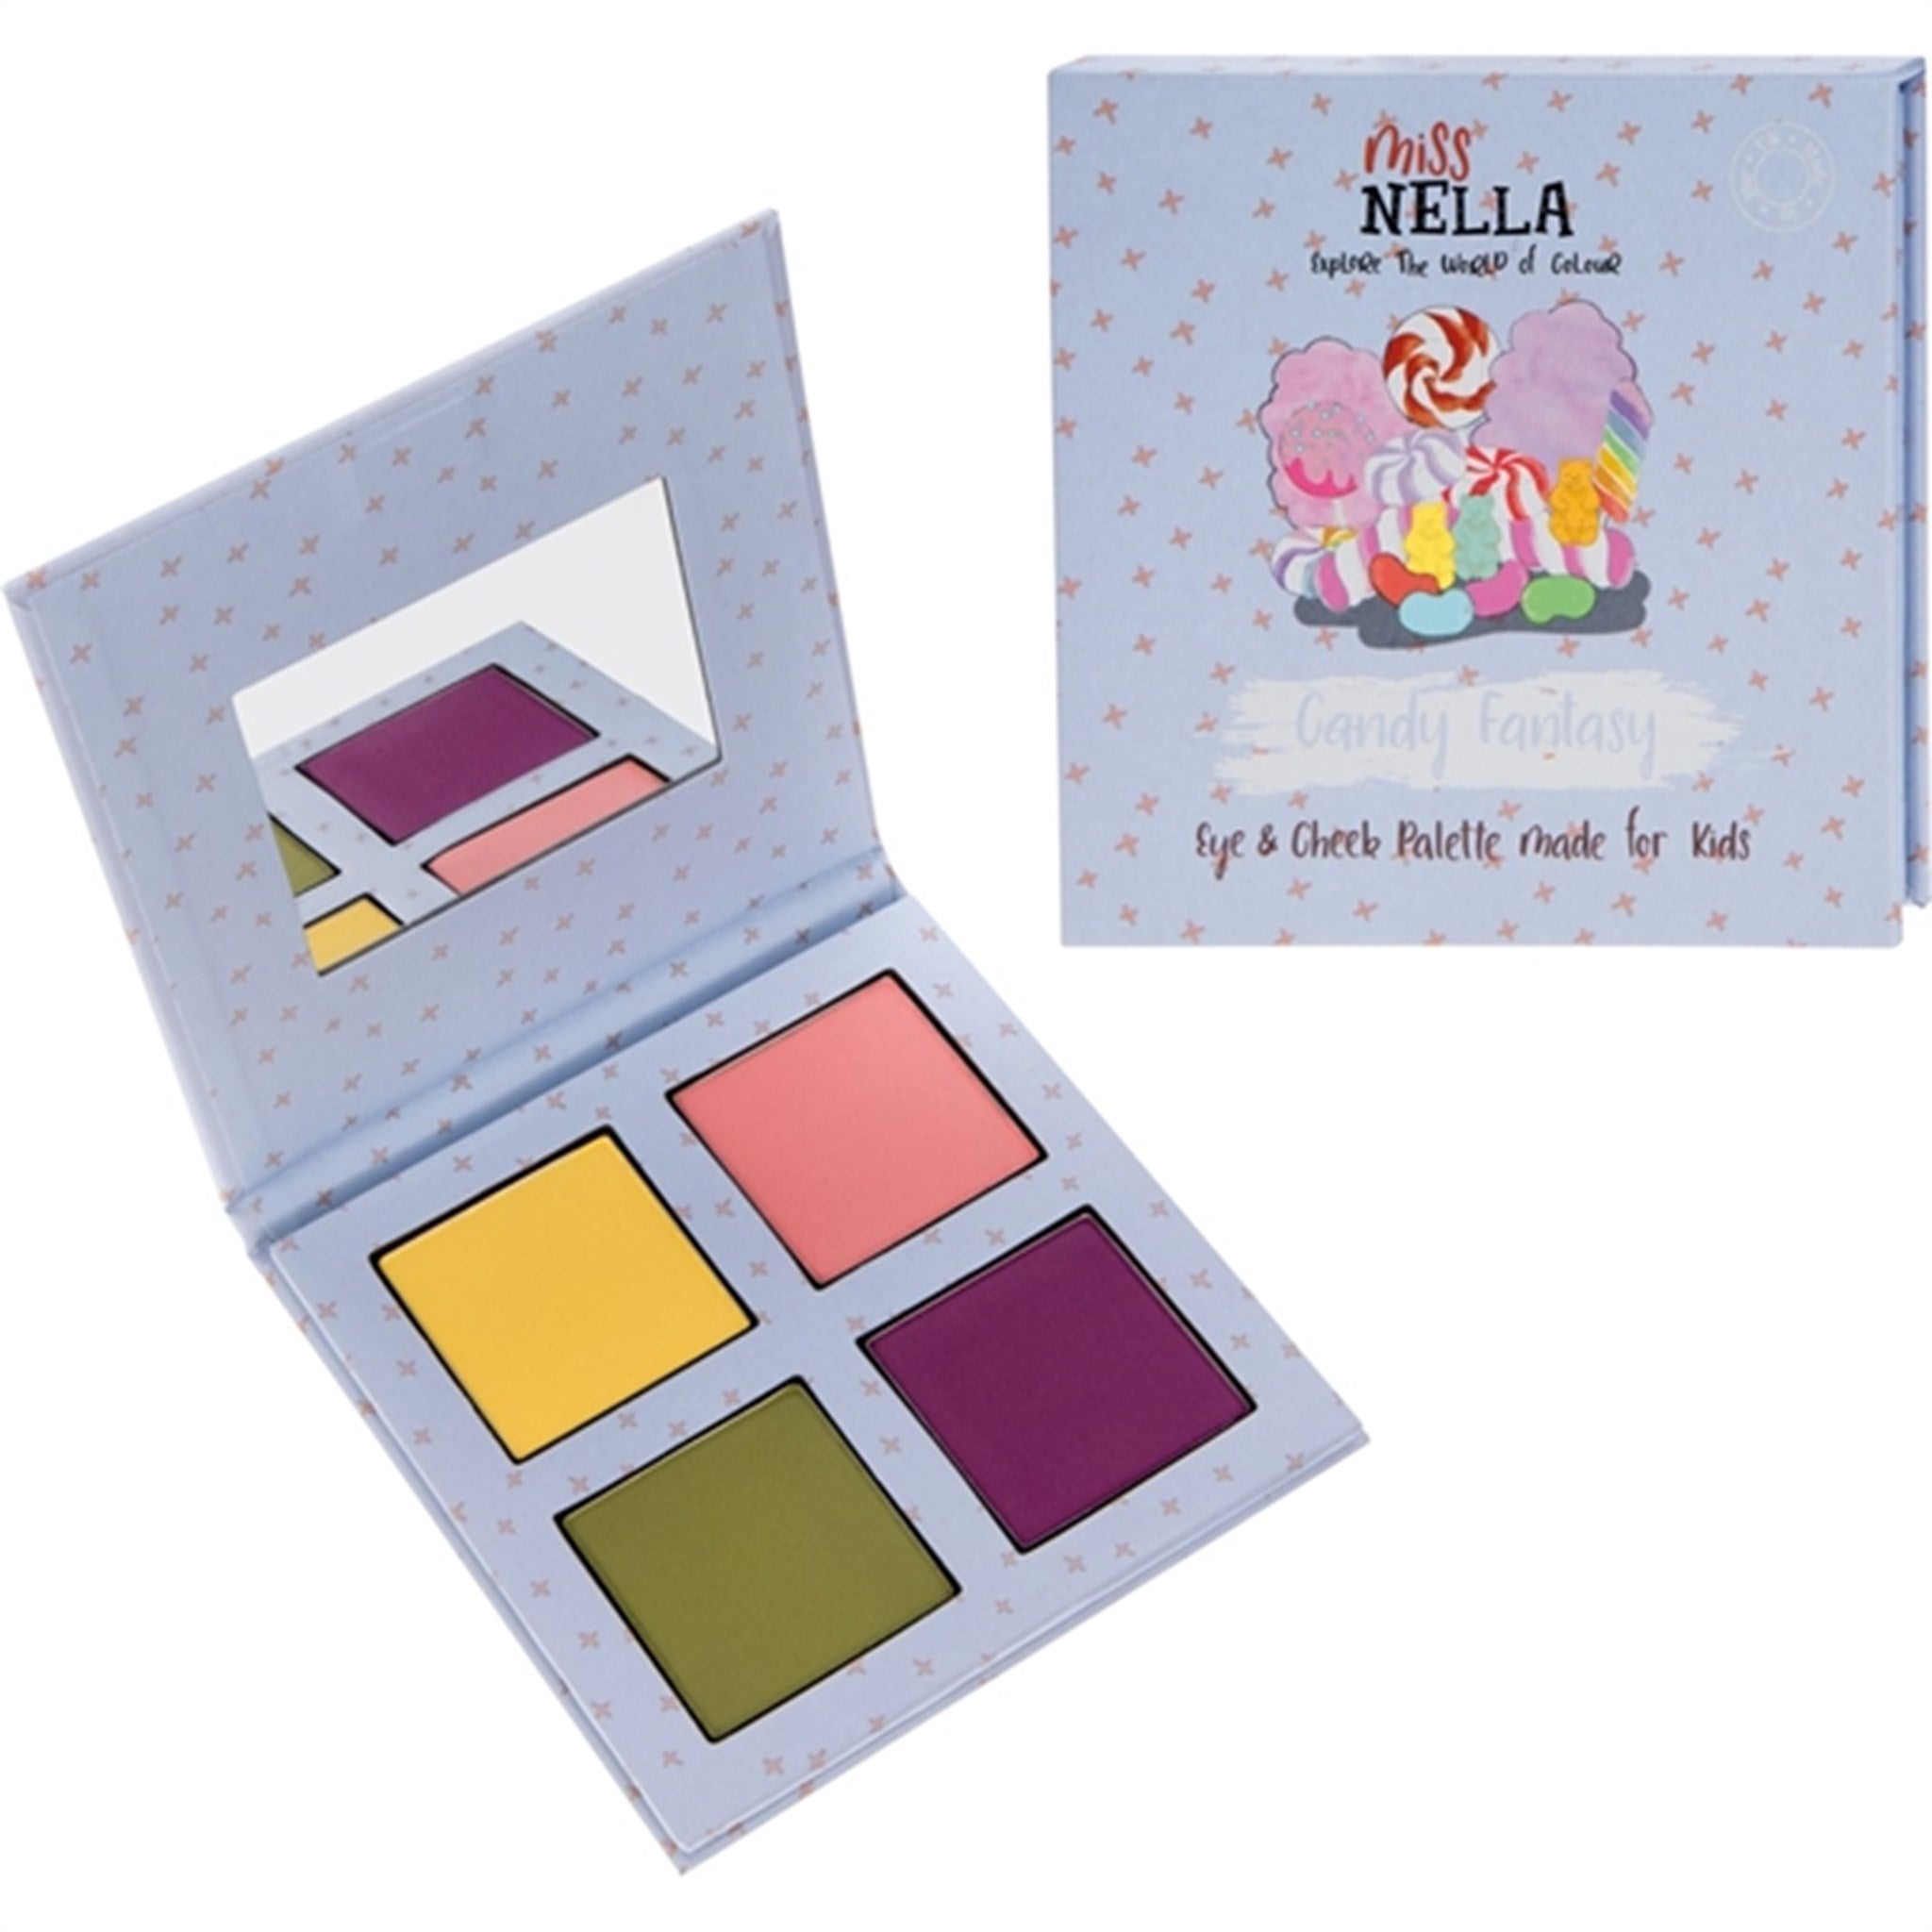 Miss Nella Eyeshadow Palette Candy Fantasy